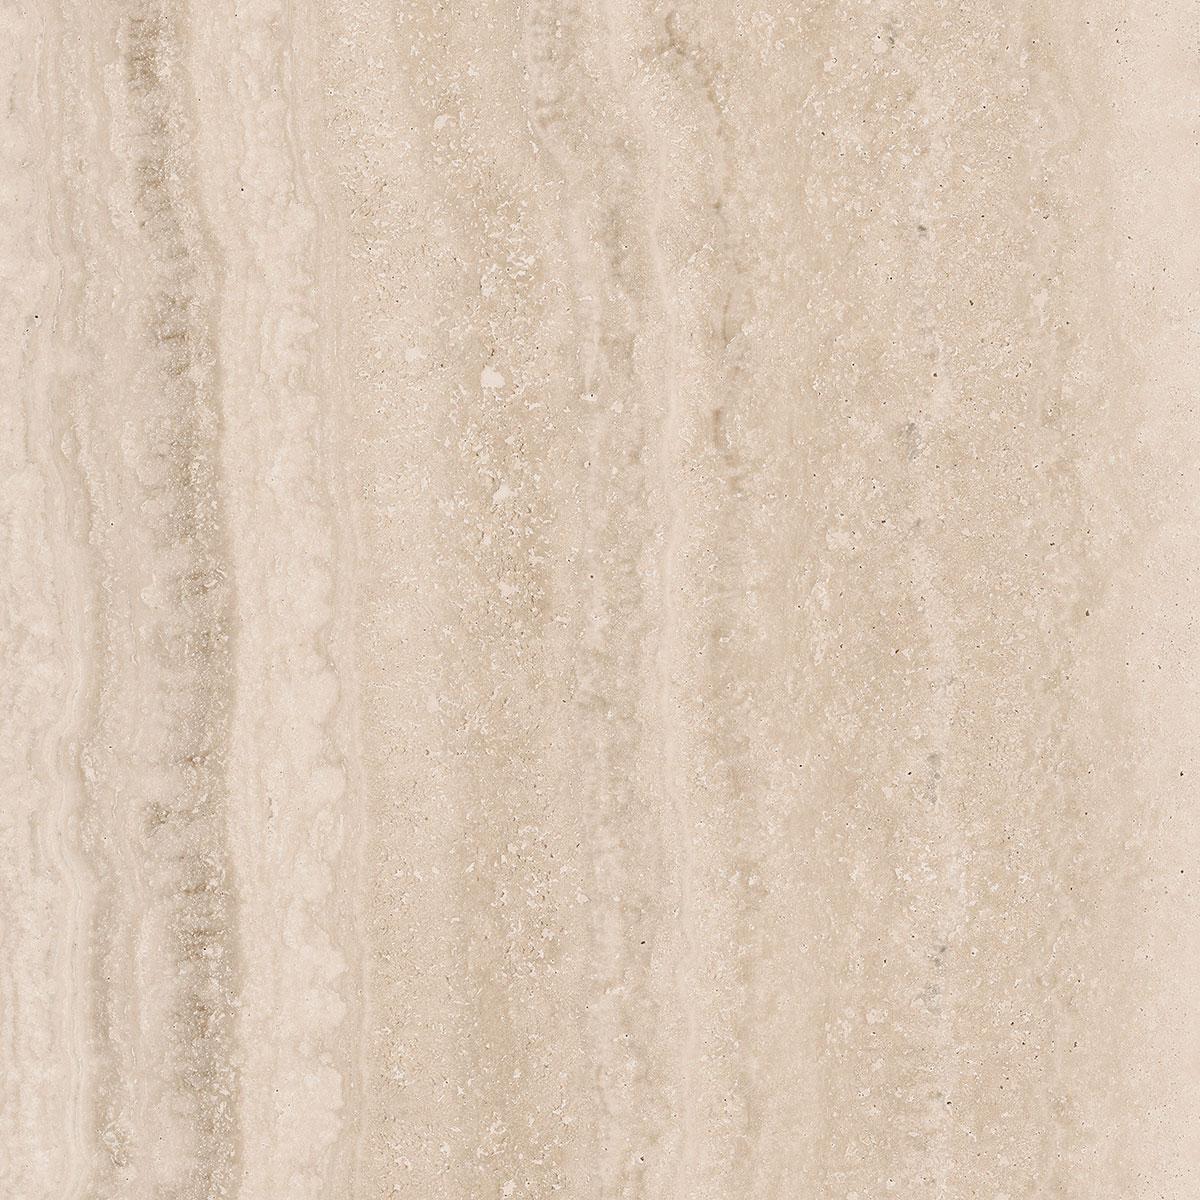 Плитка Kerama marazzi Риальто песочный светлый обрезной SG634400R 60х60 см плитка azzo ice 60х60 см